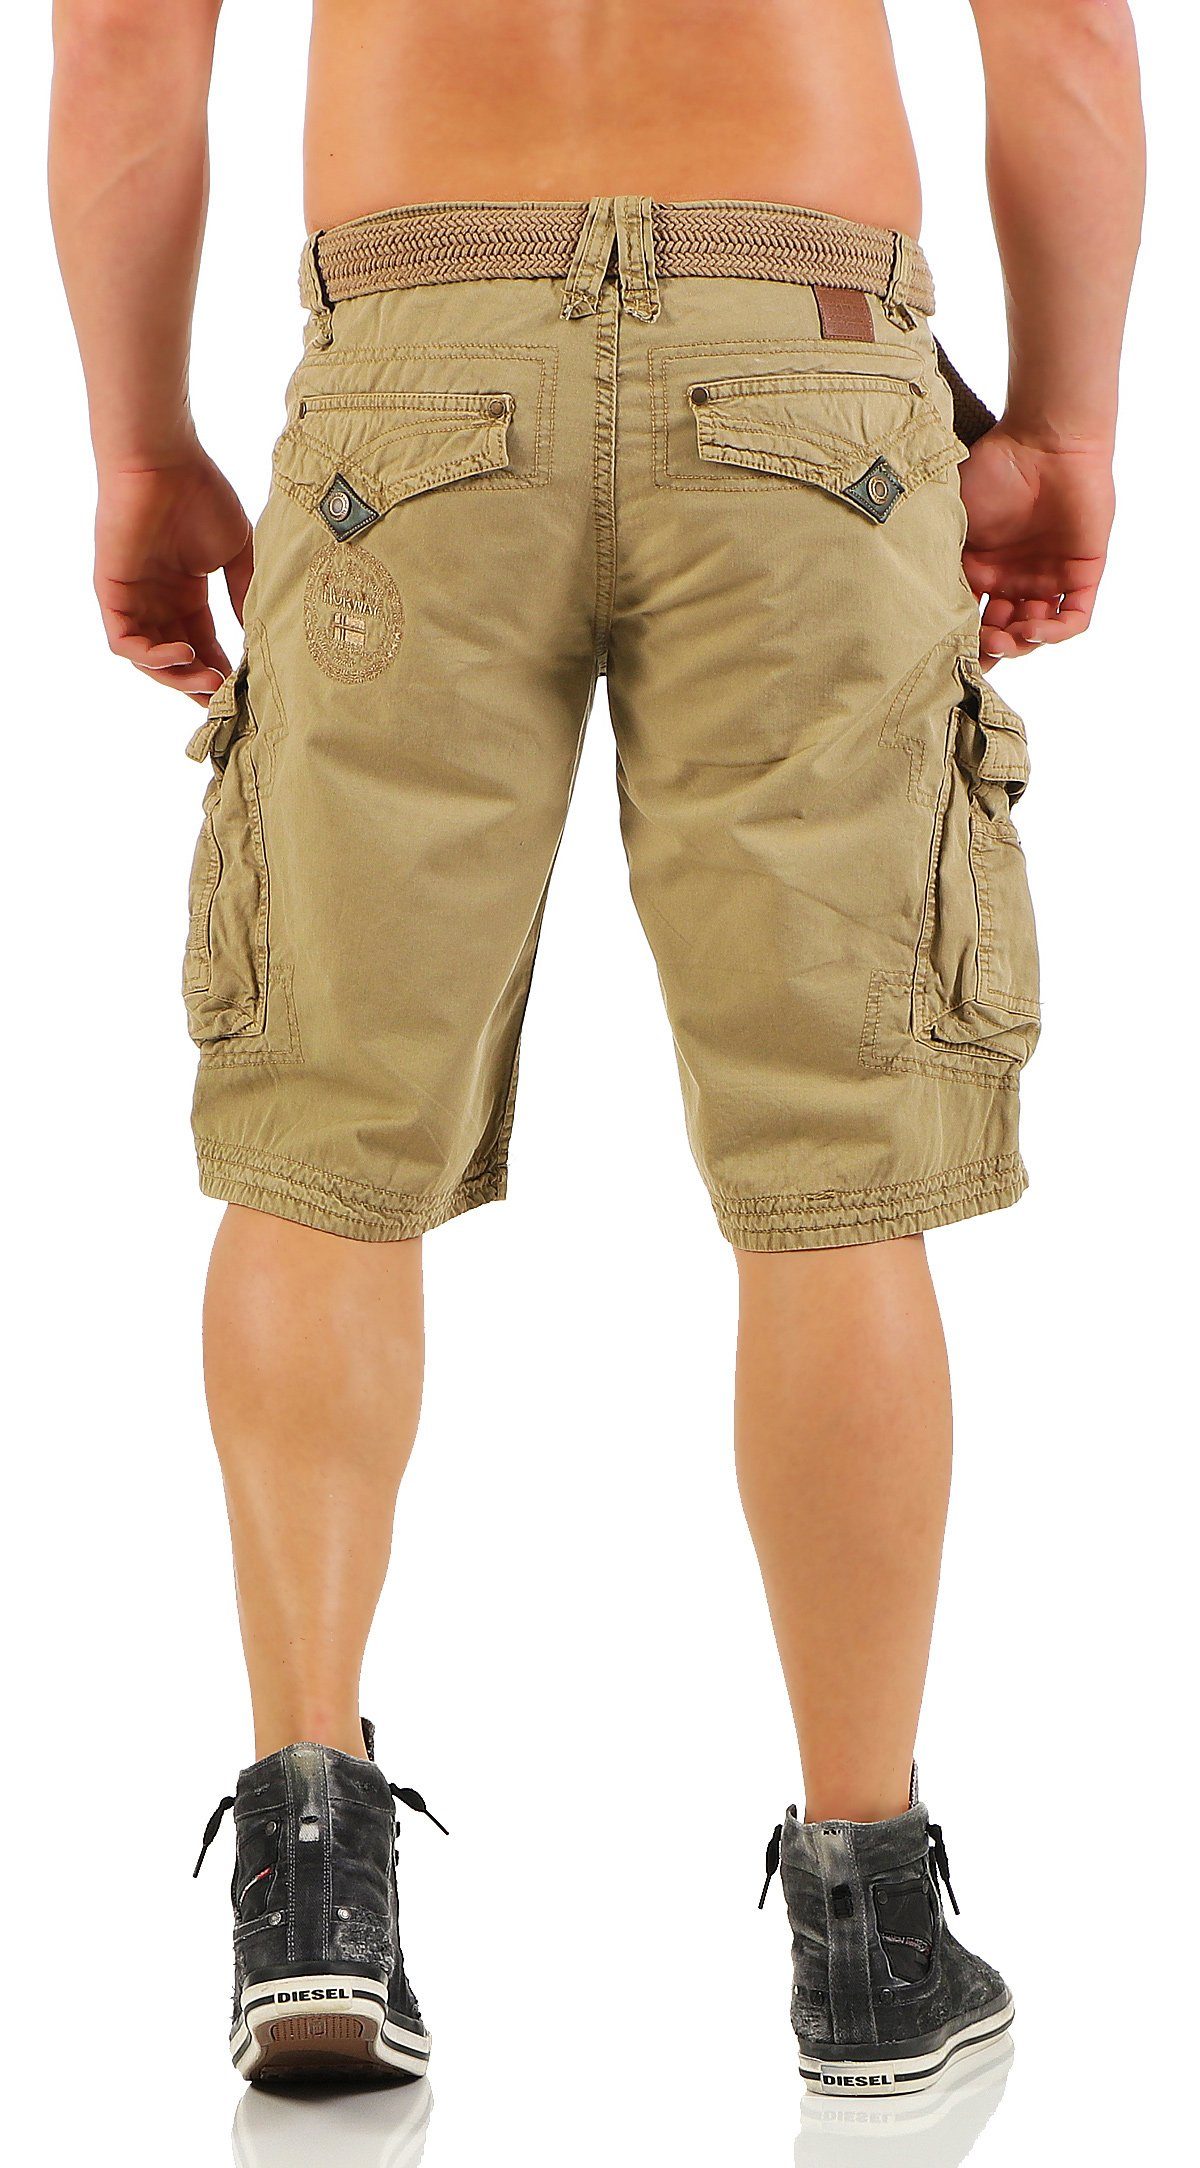 Gürtel) Herren abnehmbarem Geographical Shorts, Beige / Norway Cargoshorts kurze (mit Hose, unifarben camouflage G-PERLE Shorts